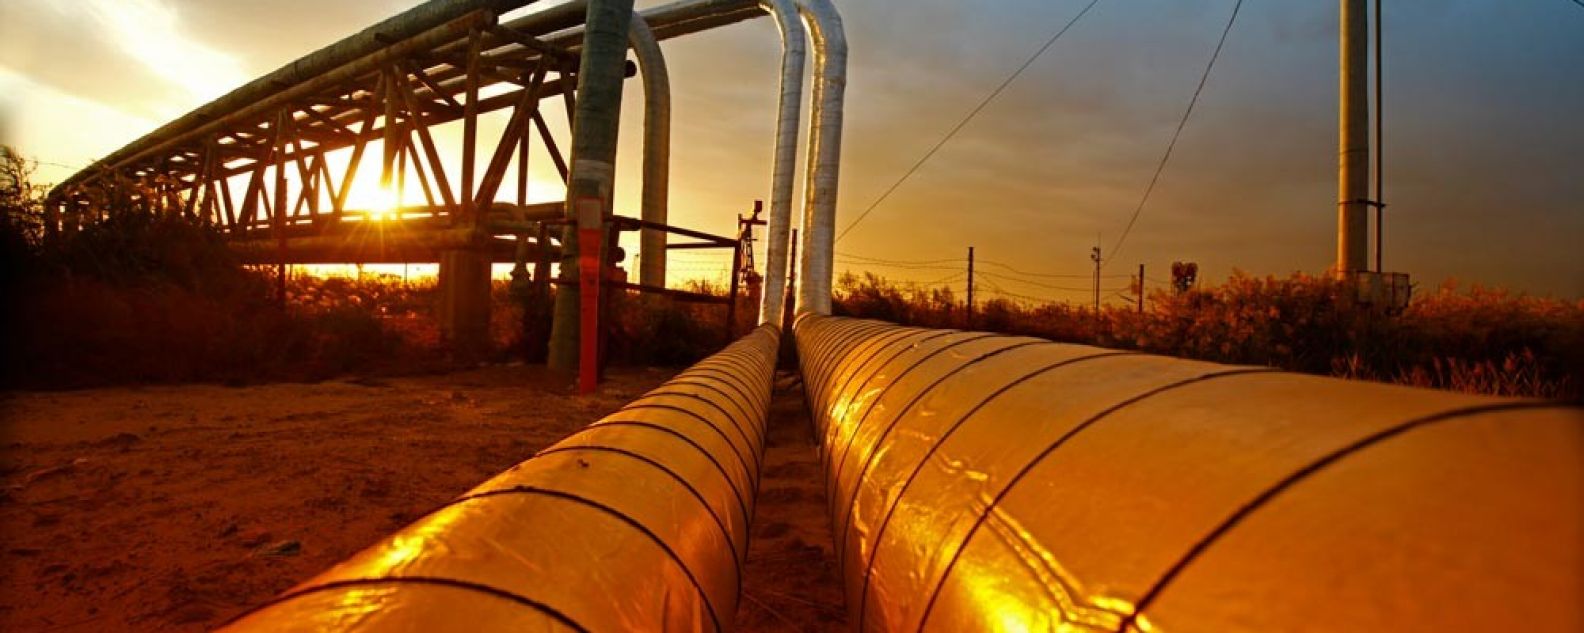 Natural gas pipeline transmission at sunset turning everything to orange